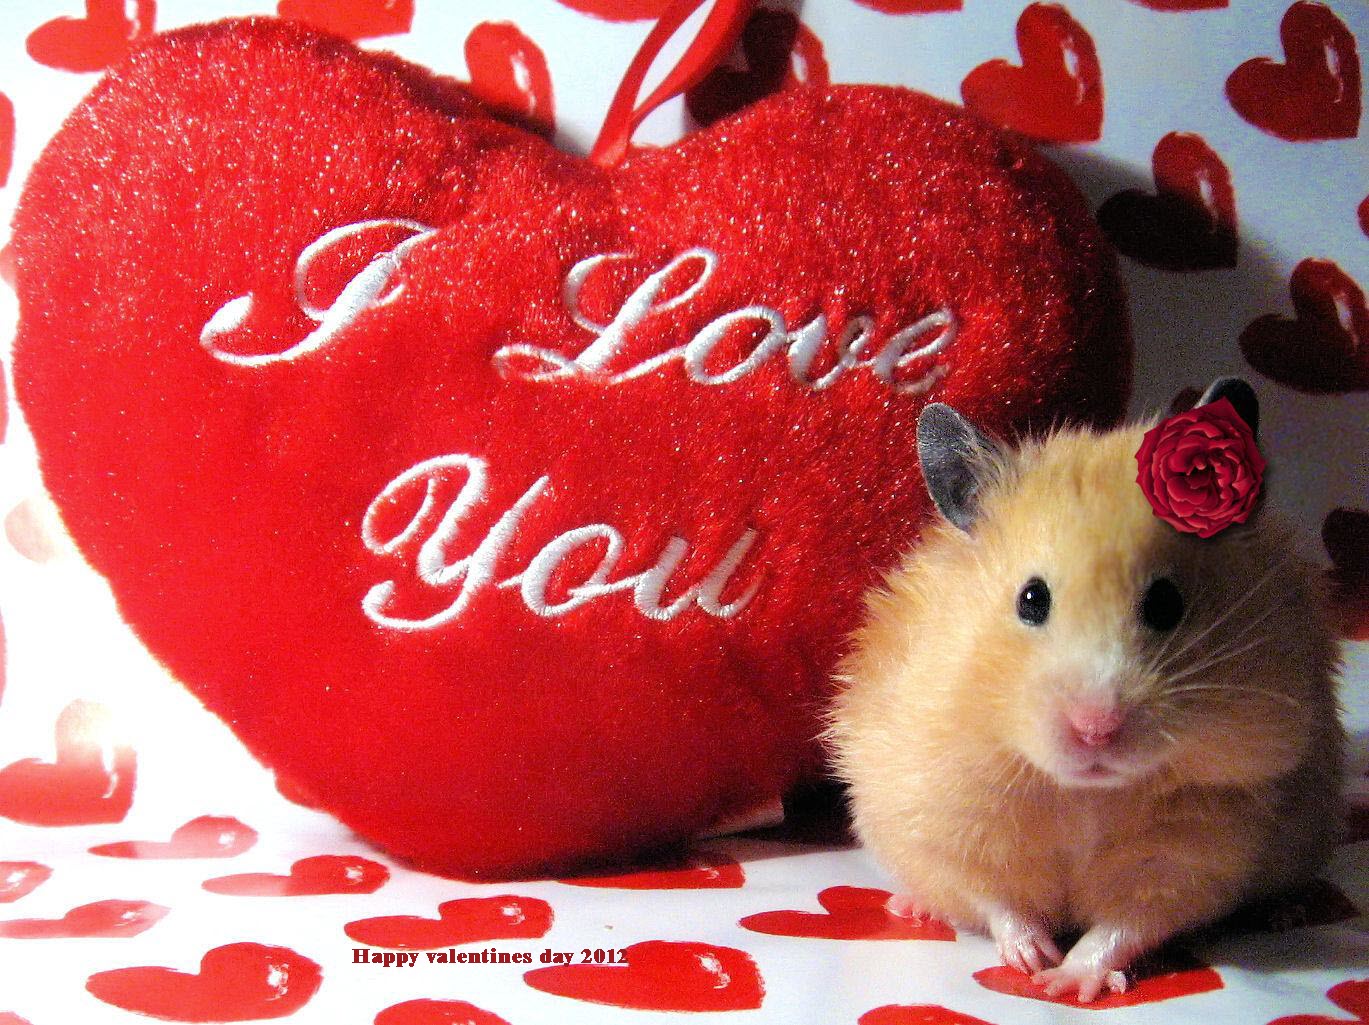 Happy-Valentine-day-2012-greeting-card-.jpg (1369×1025)